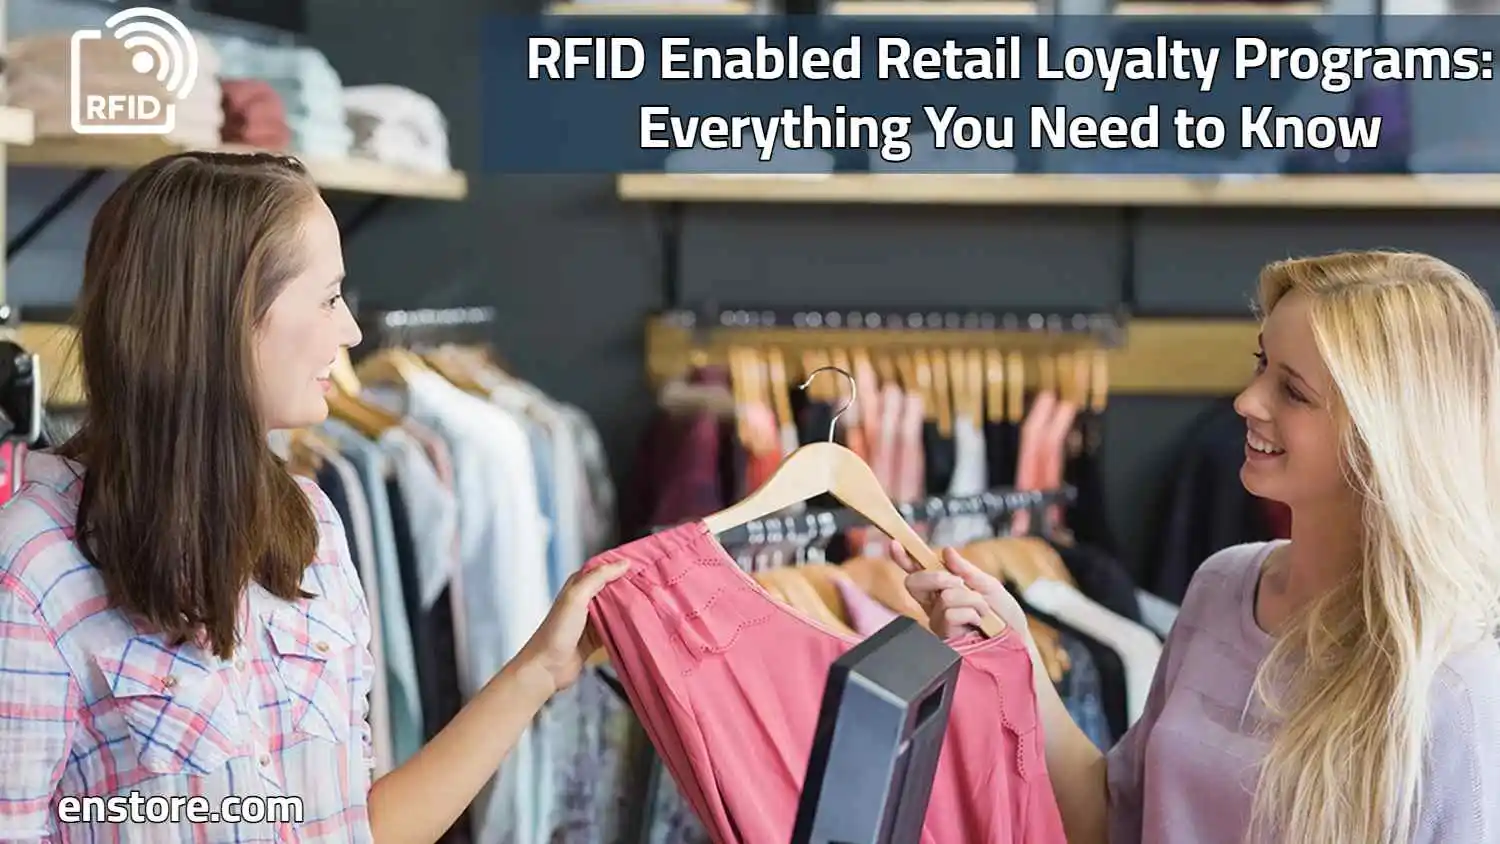 RFID Enabled Retail Loyalty Program